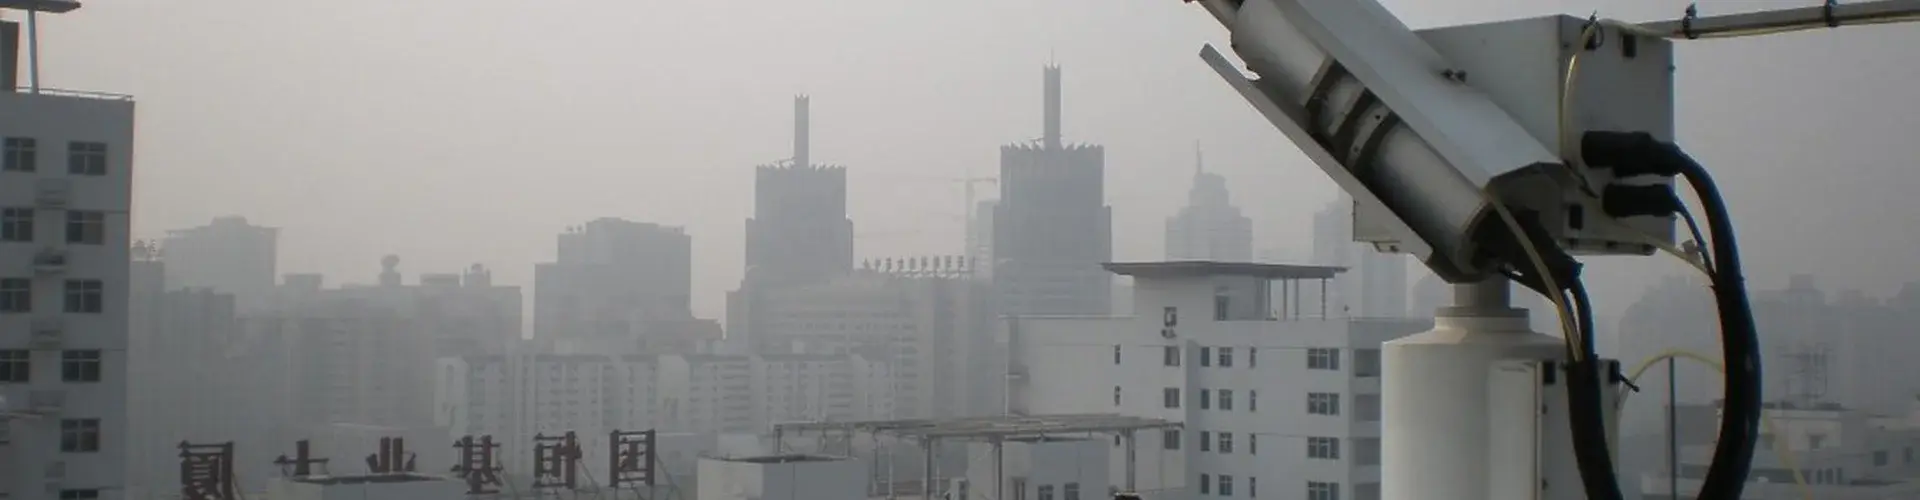 Measuring atmospheric pollution in Beijing, China (II) (Credit: Aristeidis Georgoulias, distributed via imaggeo.egu.eu)